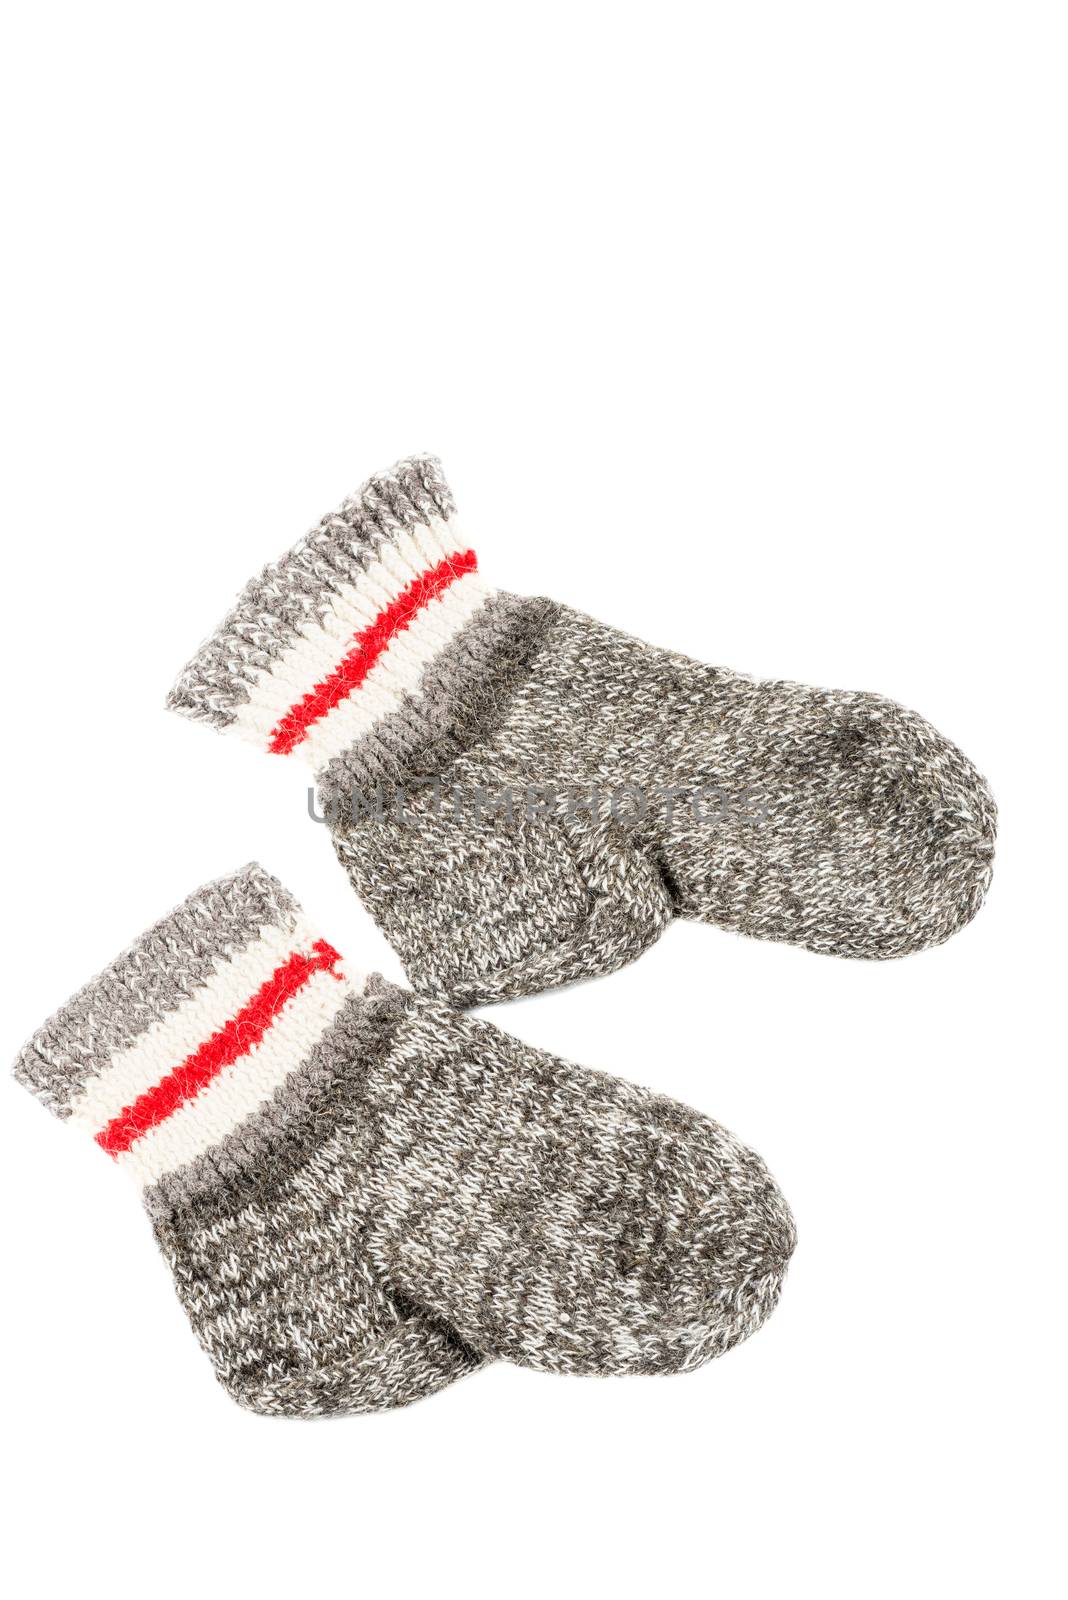 Wool socks isolated by Nanisimova